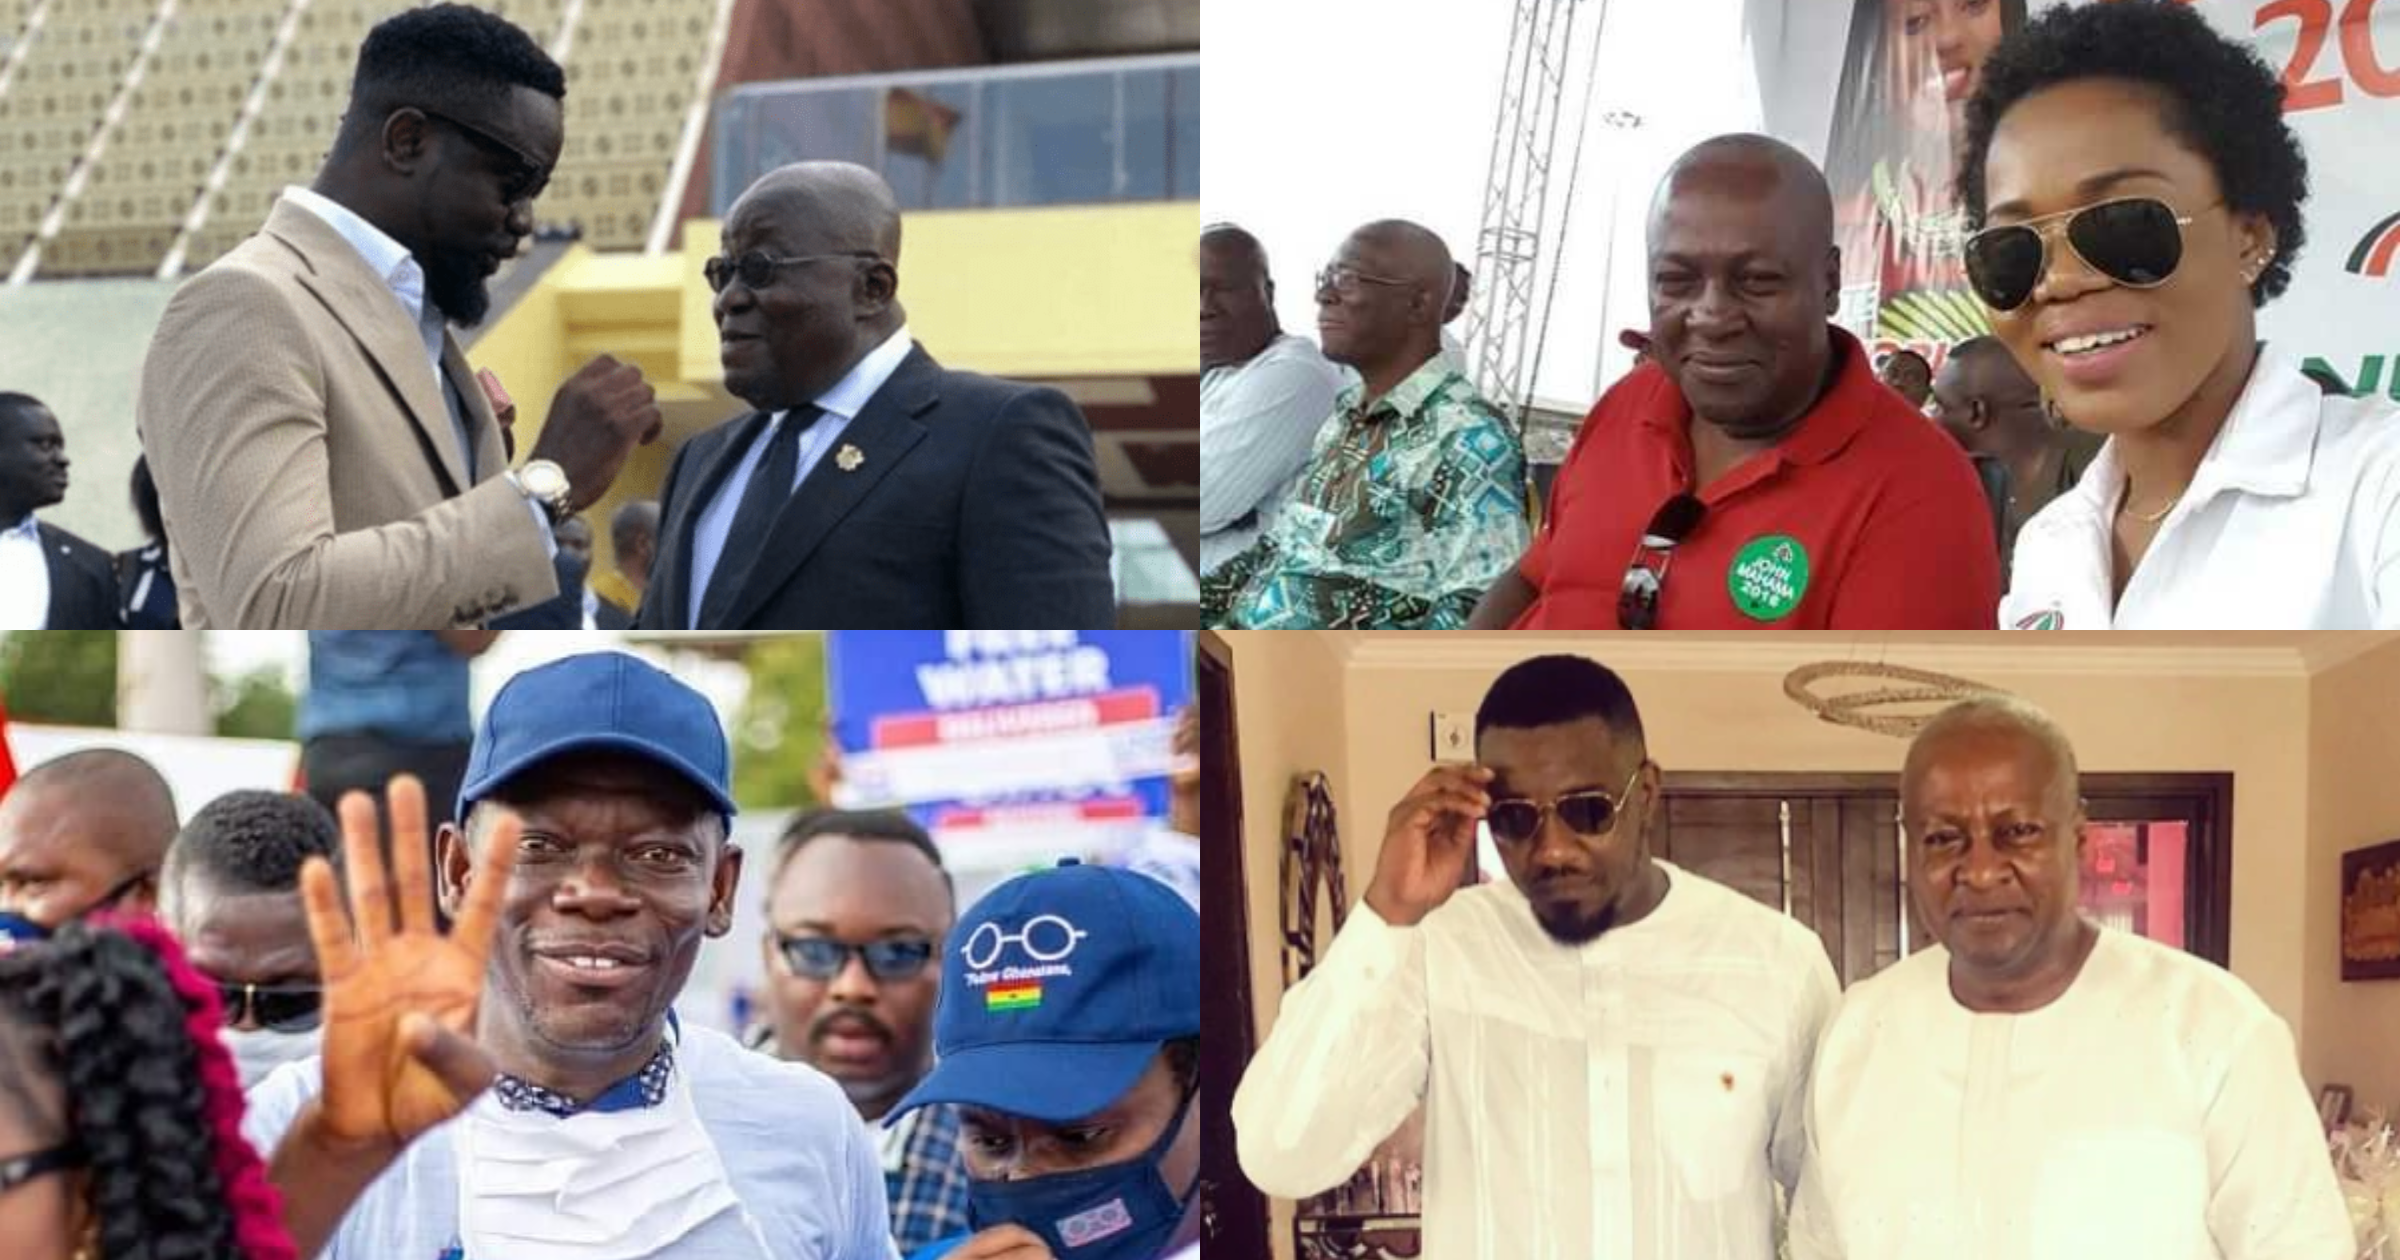 Akufo-Addo vs Mahama: Who has more celebrities between NPP and NDC ahead of 2020 elections?